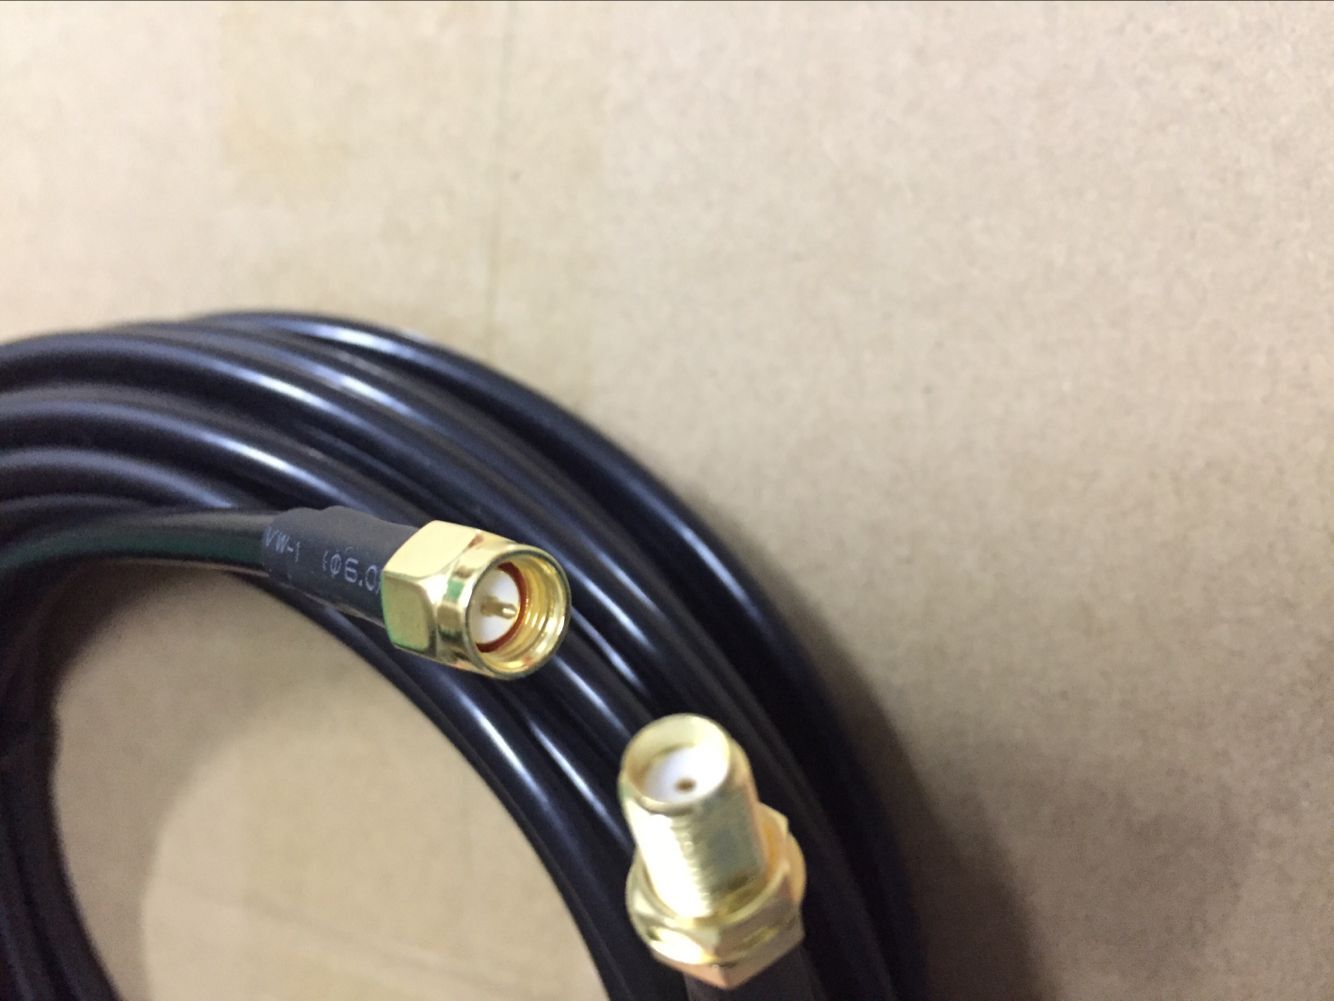  2018/4/20 1000pcs SMA male - SMA female RF-кабель готов к отправке